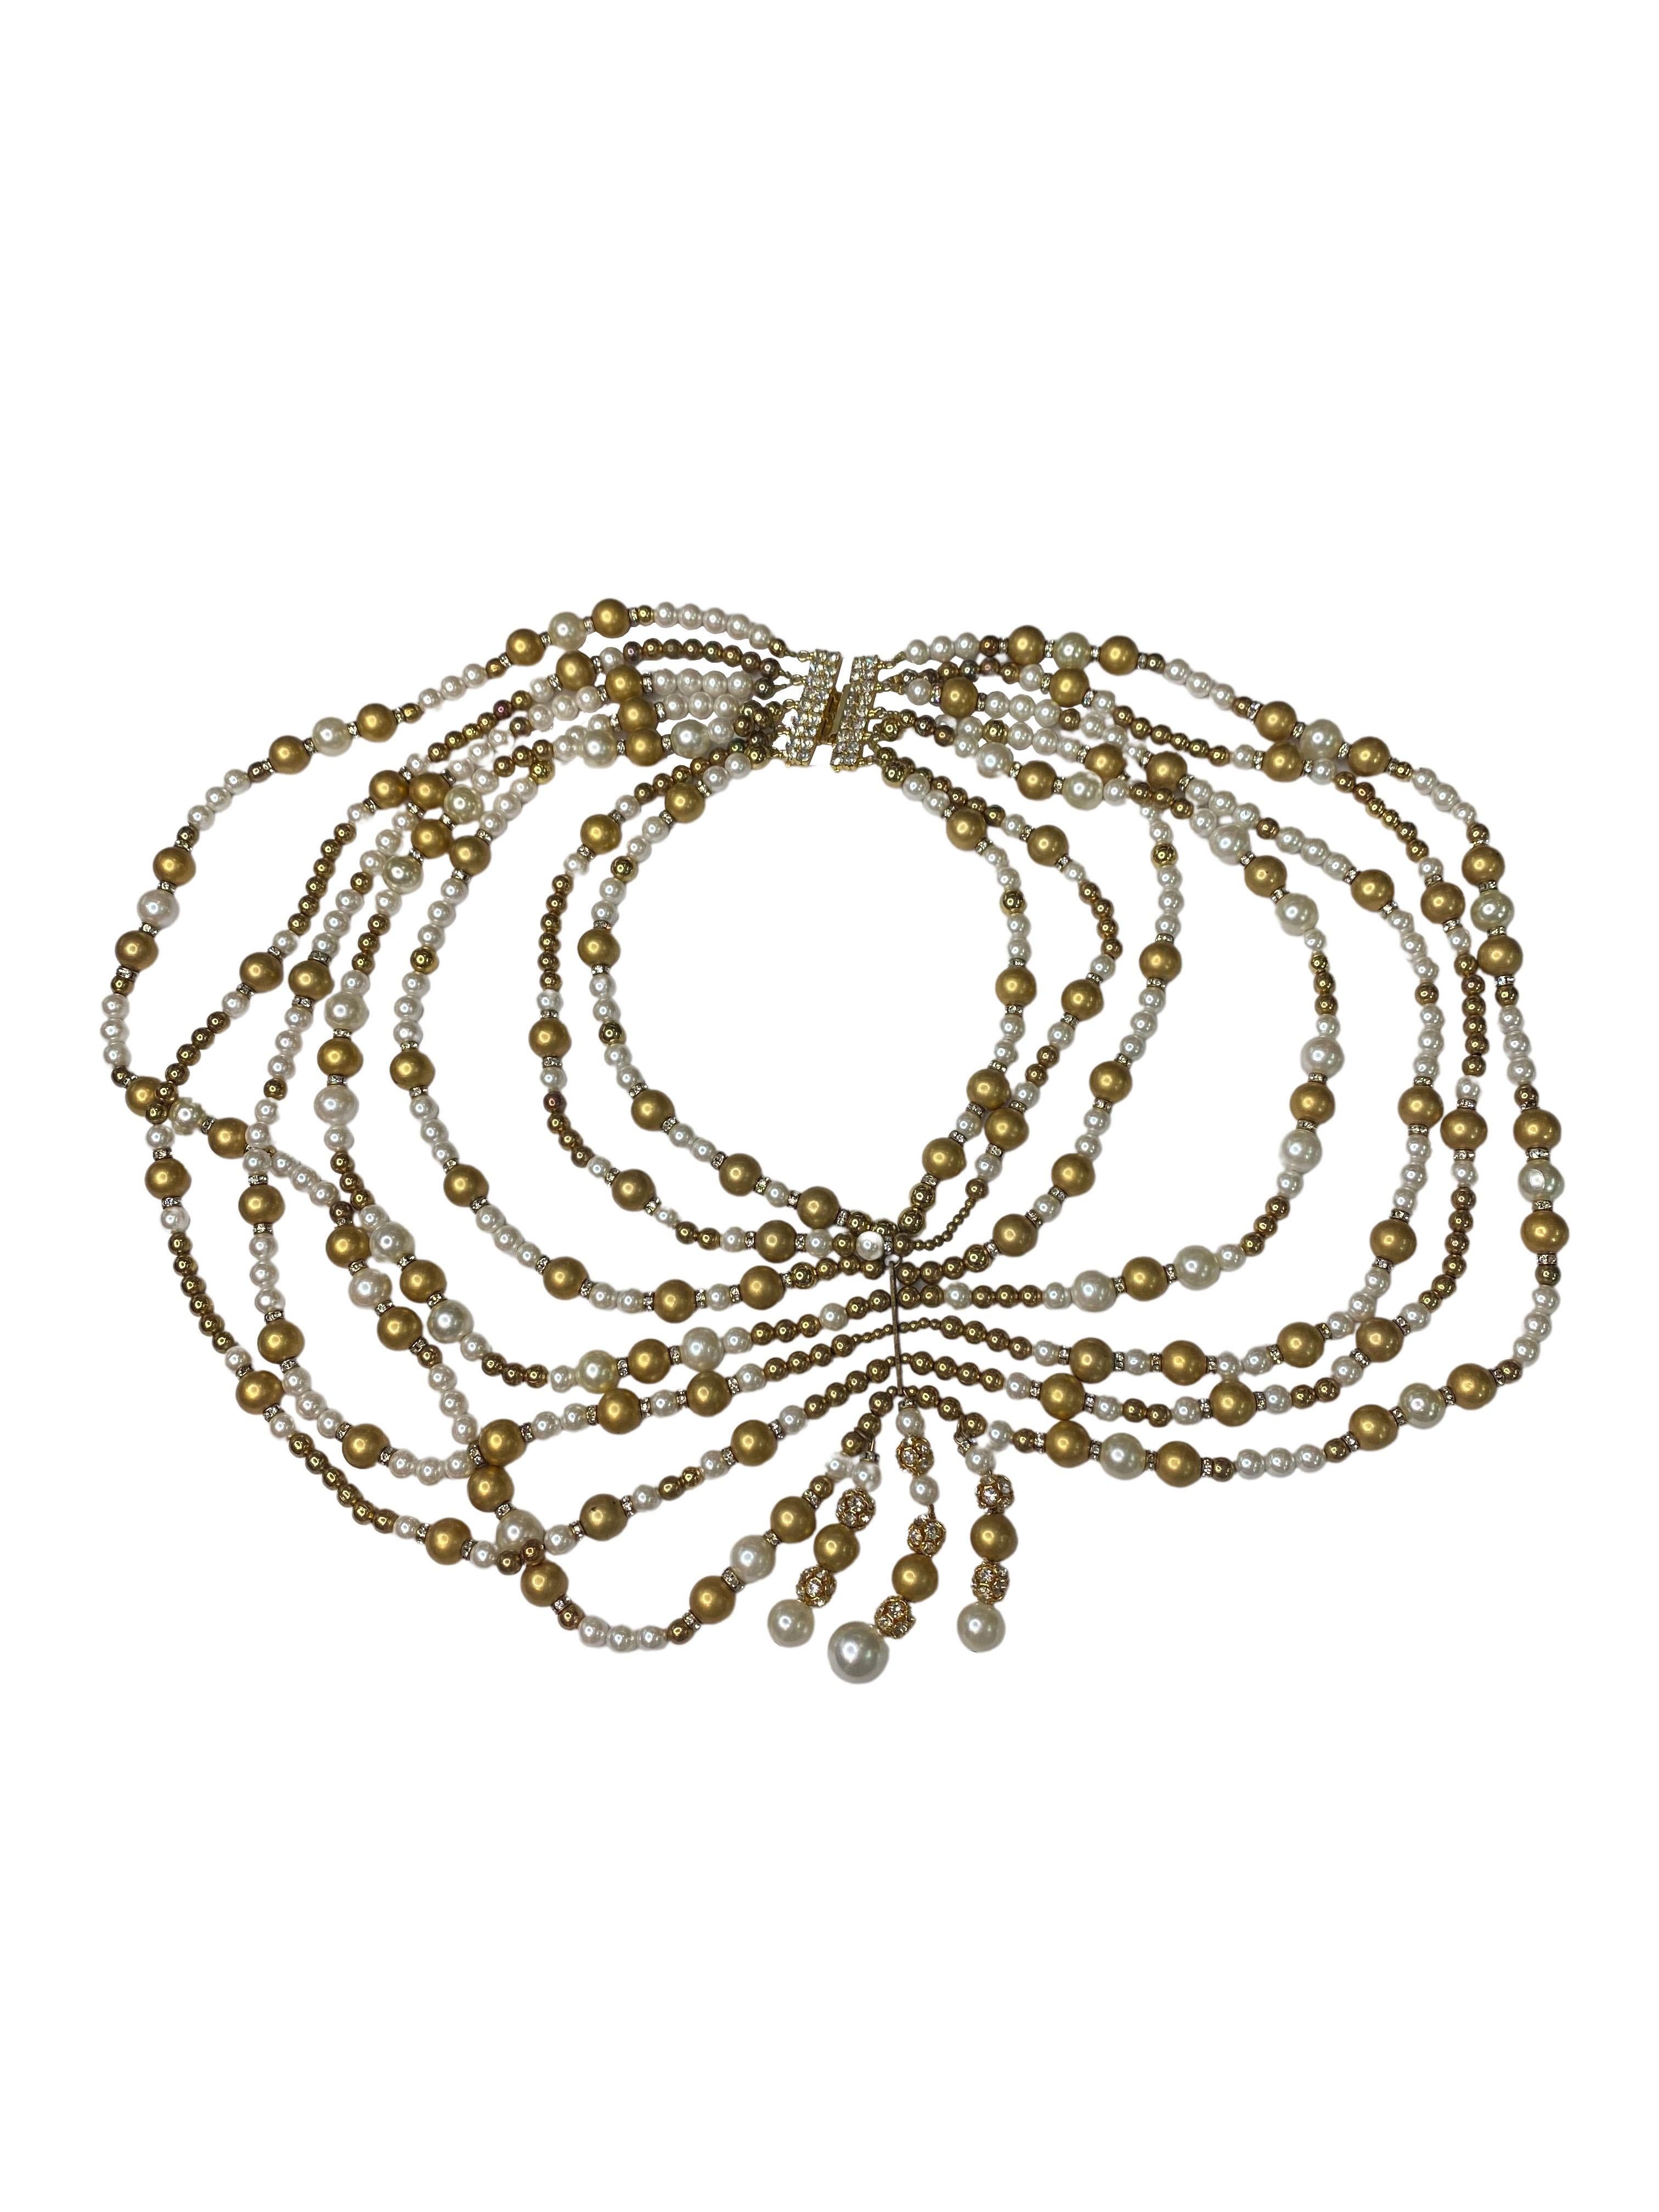 Women's 1970S Beaded Shoulder Capelet Choker Necklace For Sale